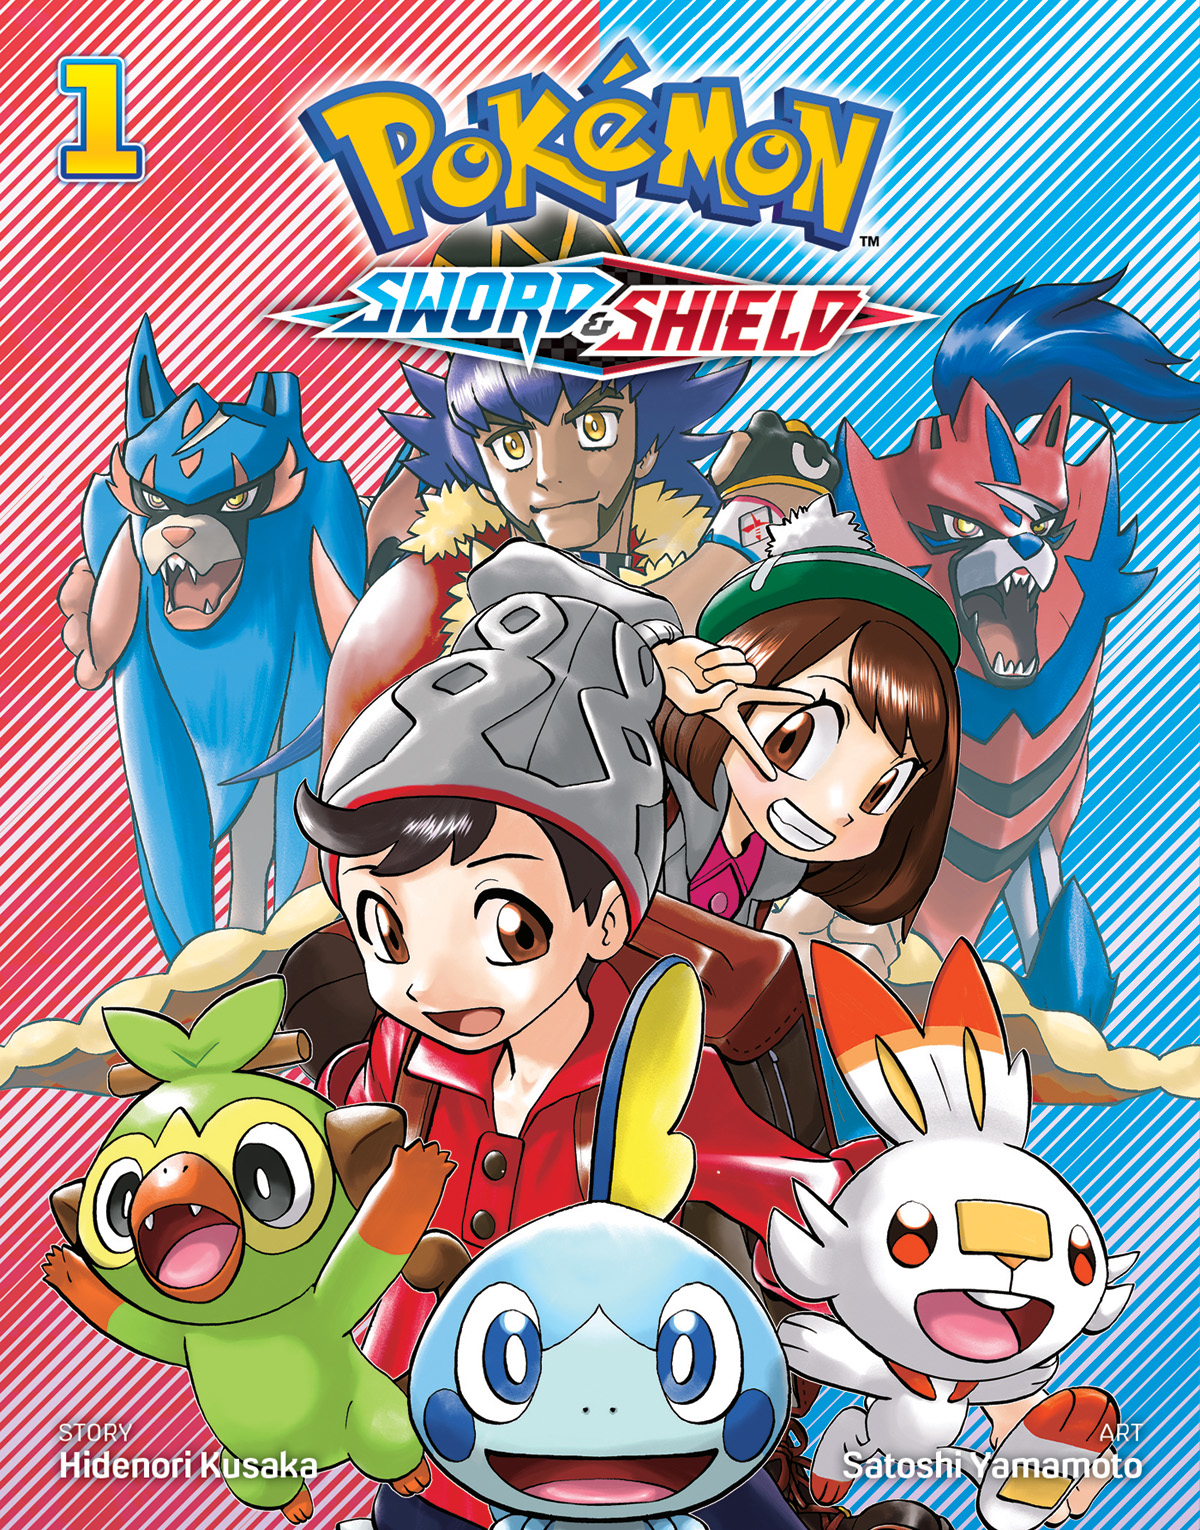 Pokémon Sword & Shield Manga Volume 1